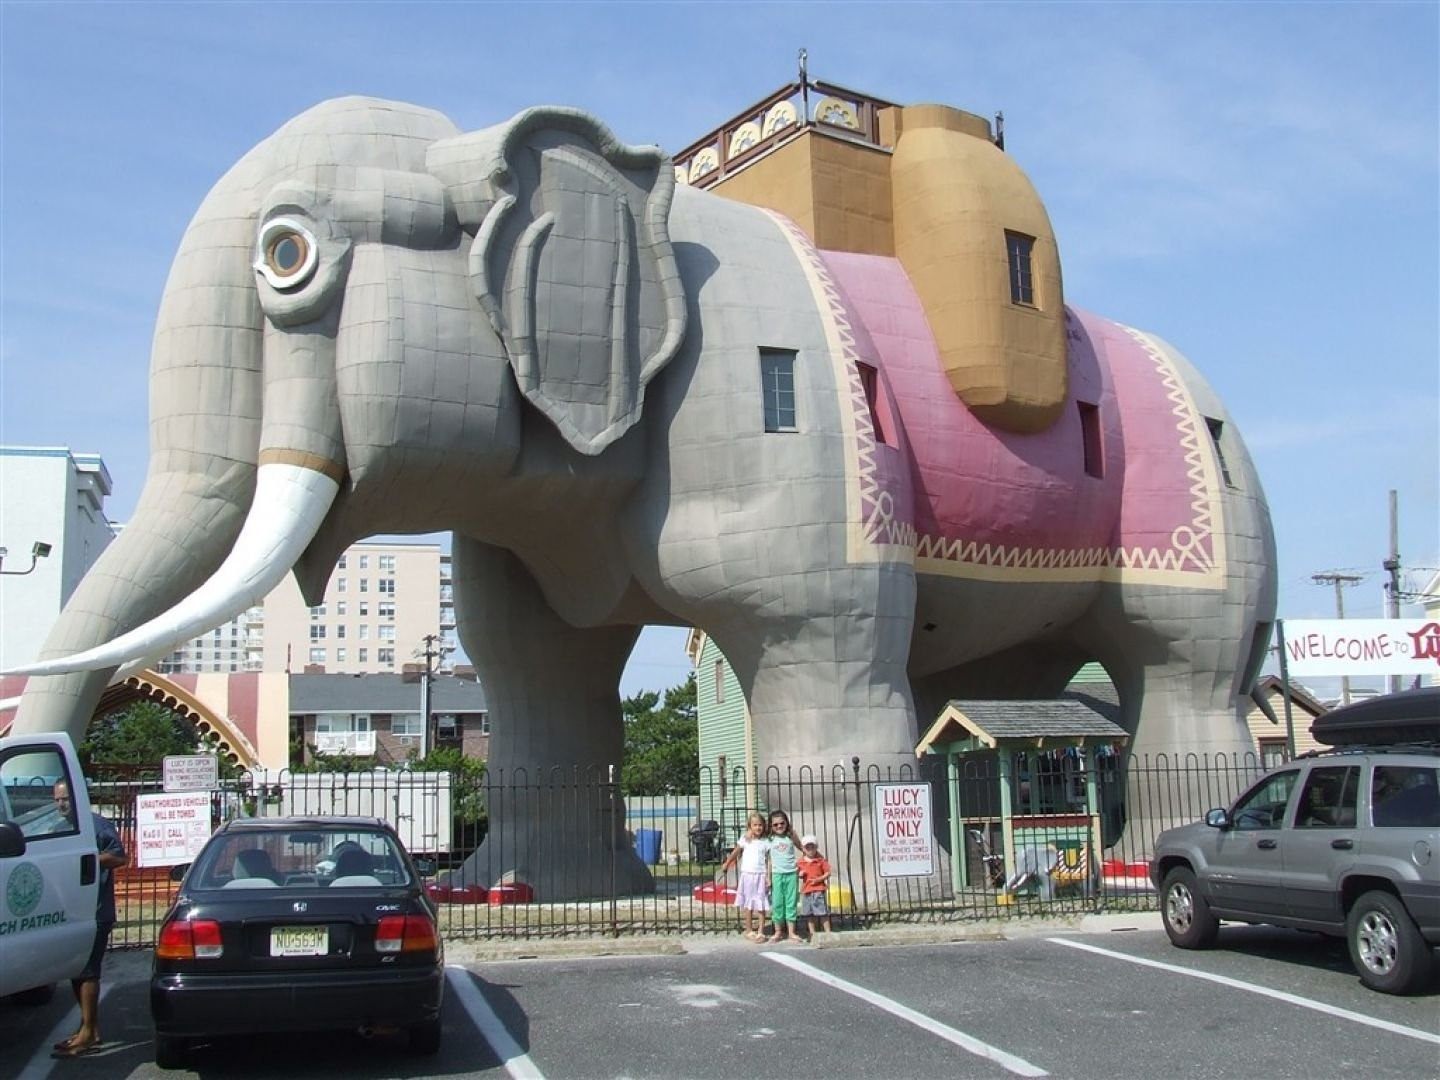 Fun building. Дом-слон на Новорязанском шоссе. Дом слон на Новорязанском шоссе внутри. Дом-слон на Новорязанском шоссе изнутри.